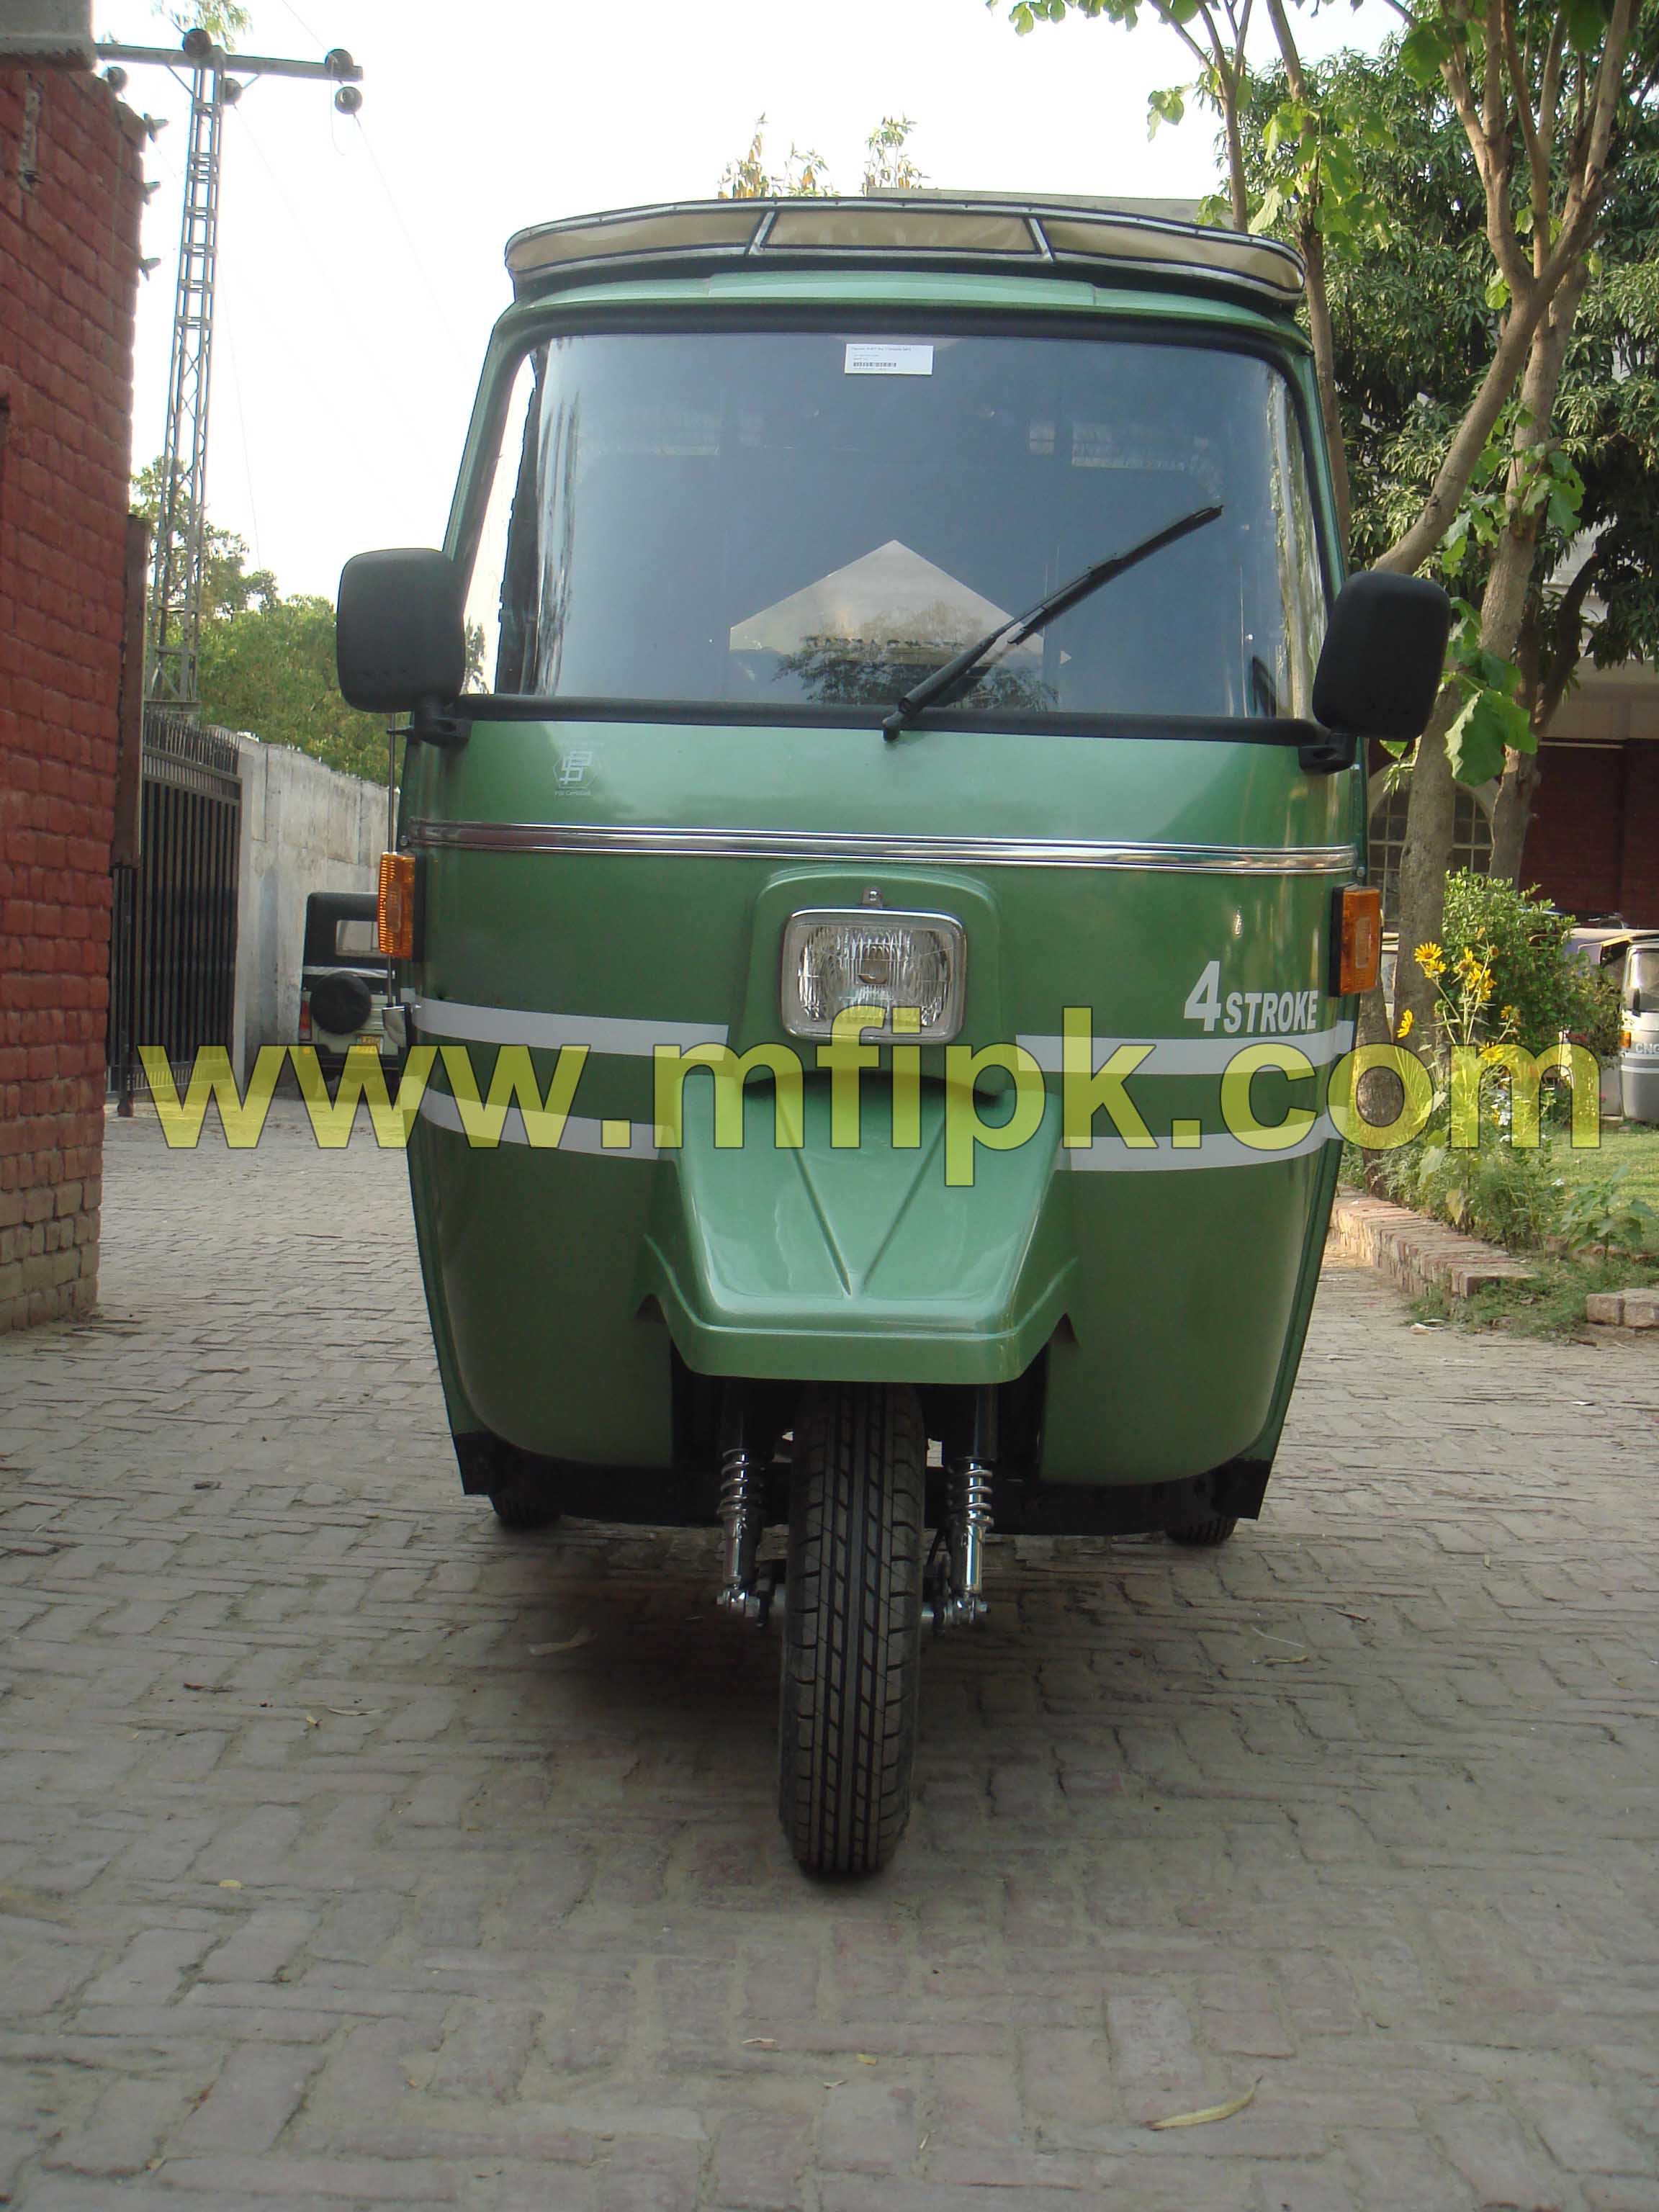  Auto Passenger Rickshaw